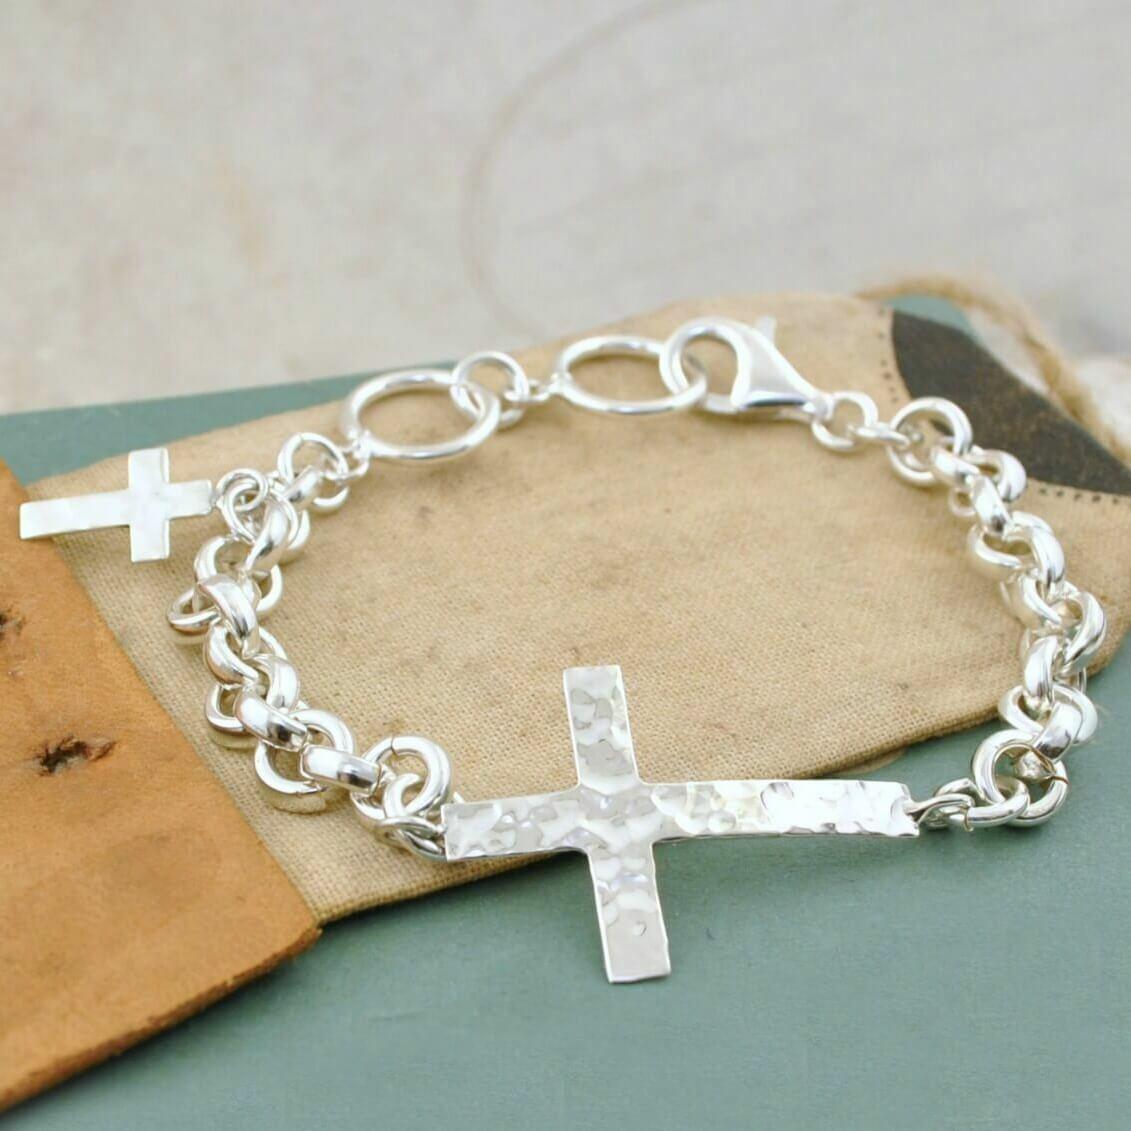 Sterling silver link bracelet with hammered cross